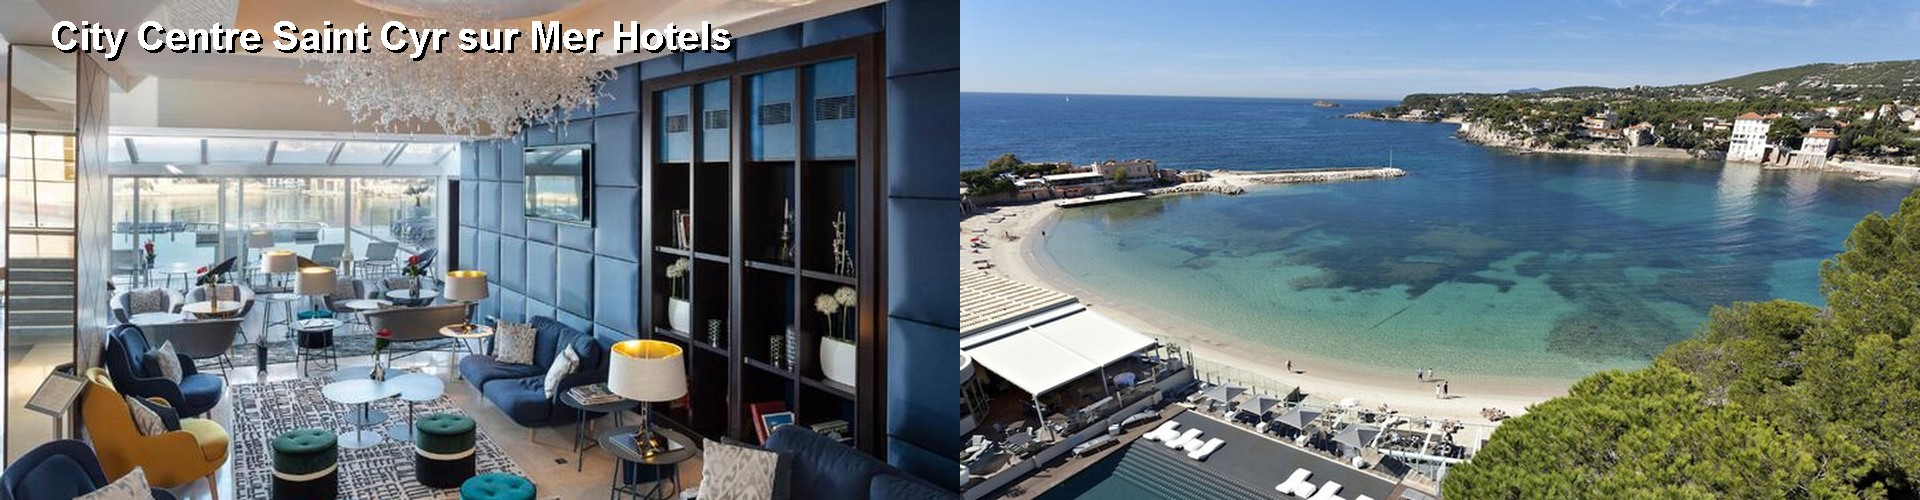 5 Best Hotels near City Centre Saint Cyr sur Mer